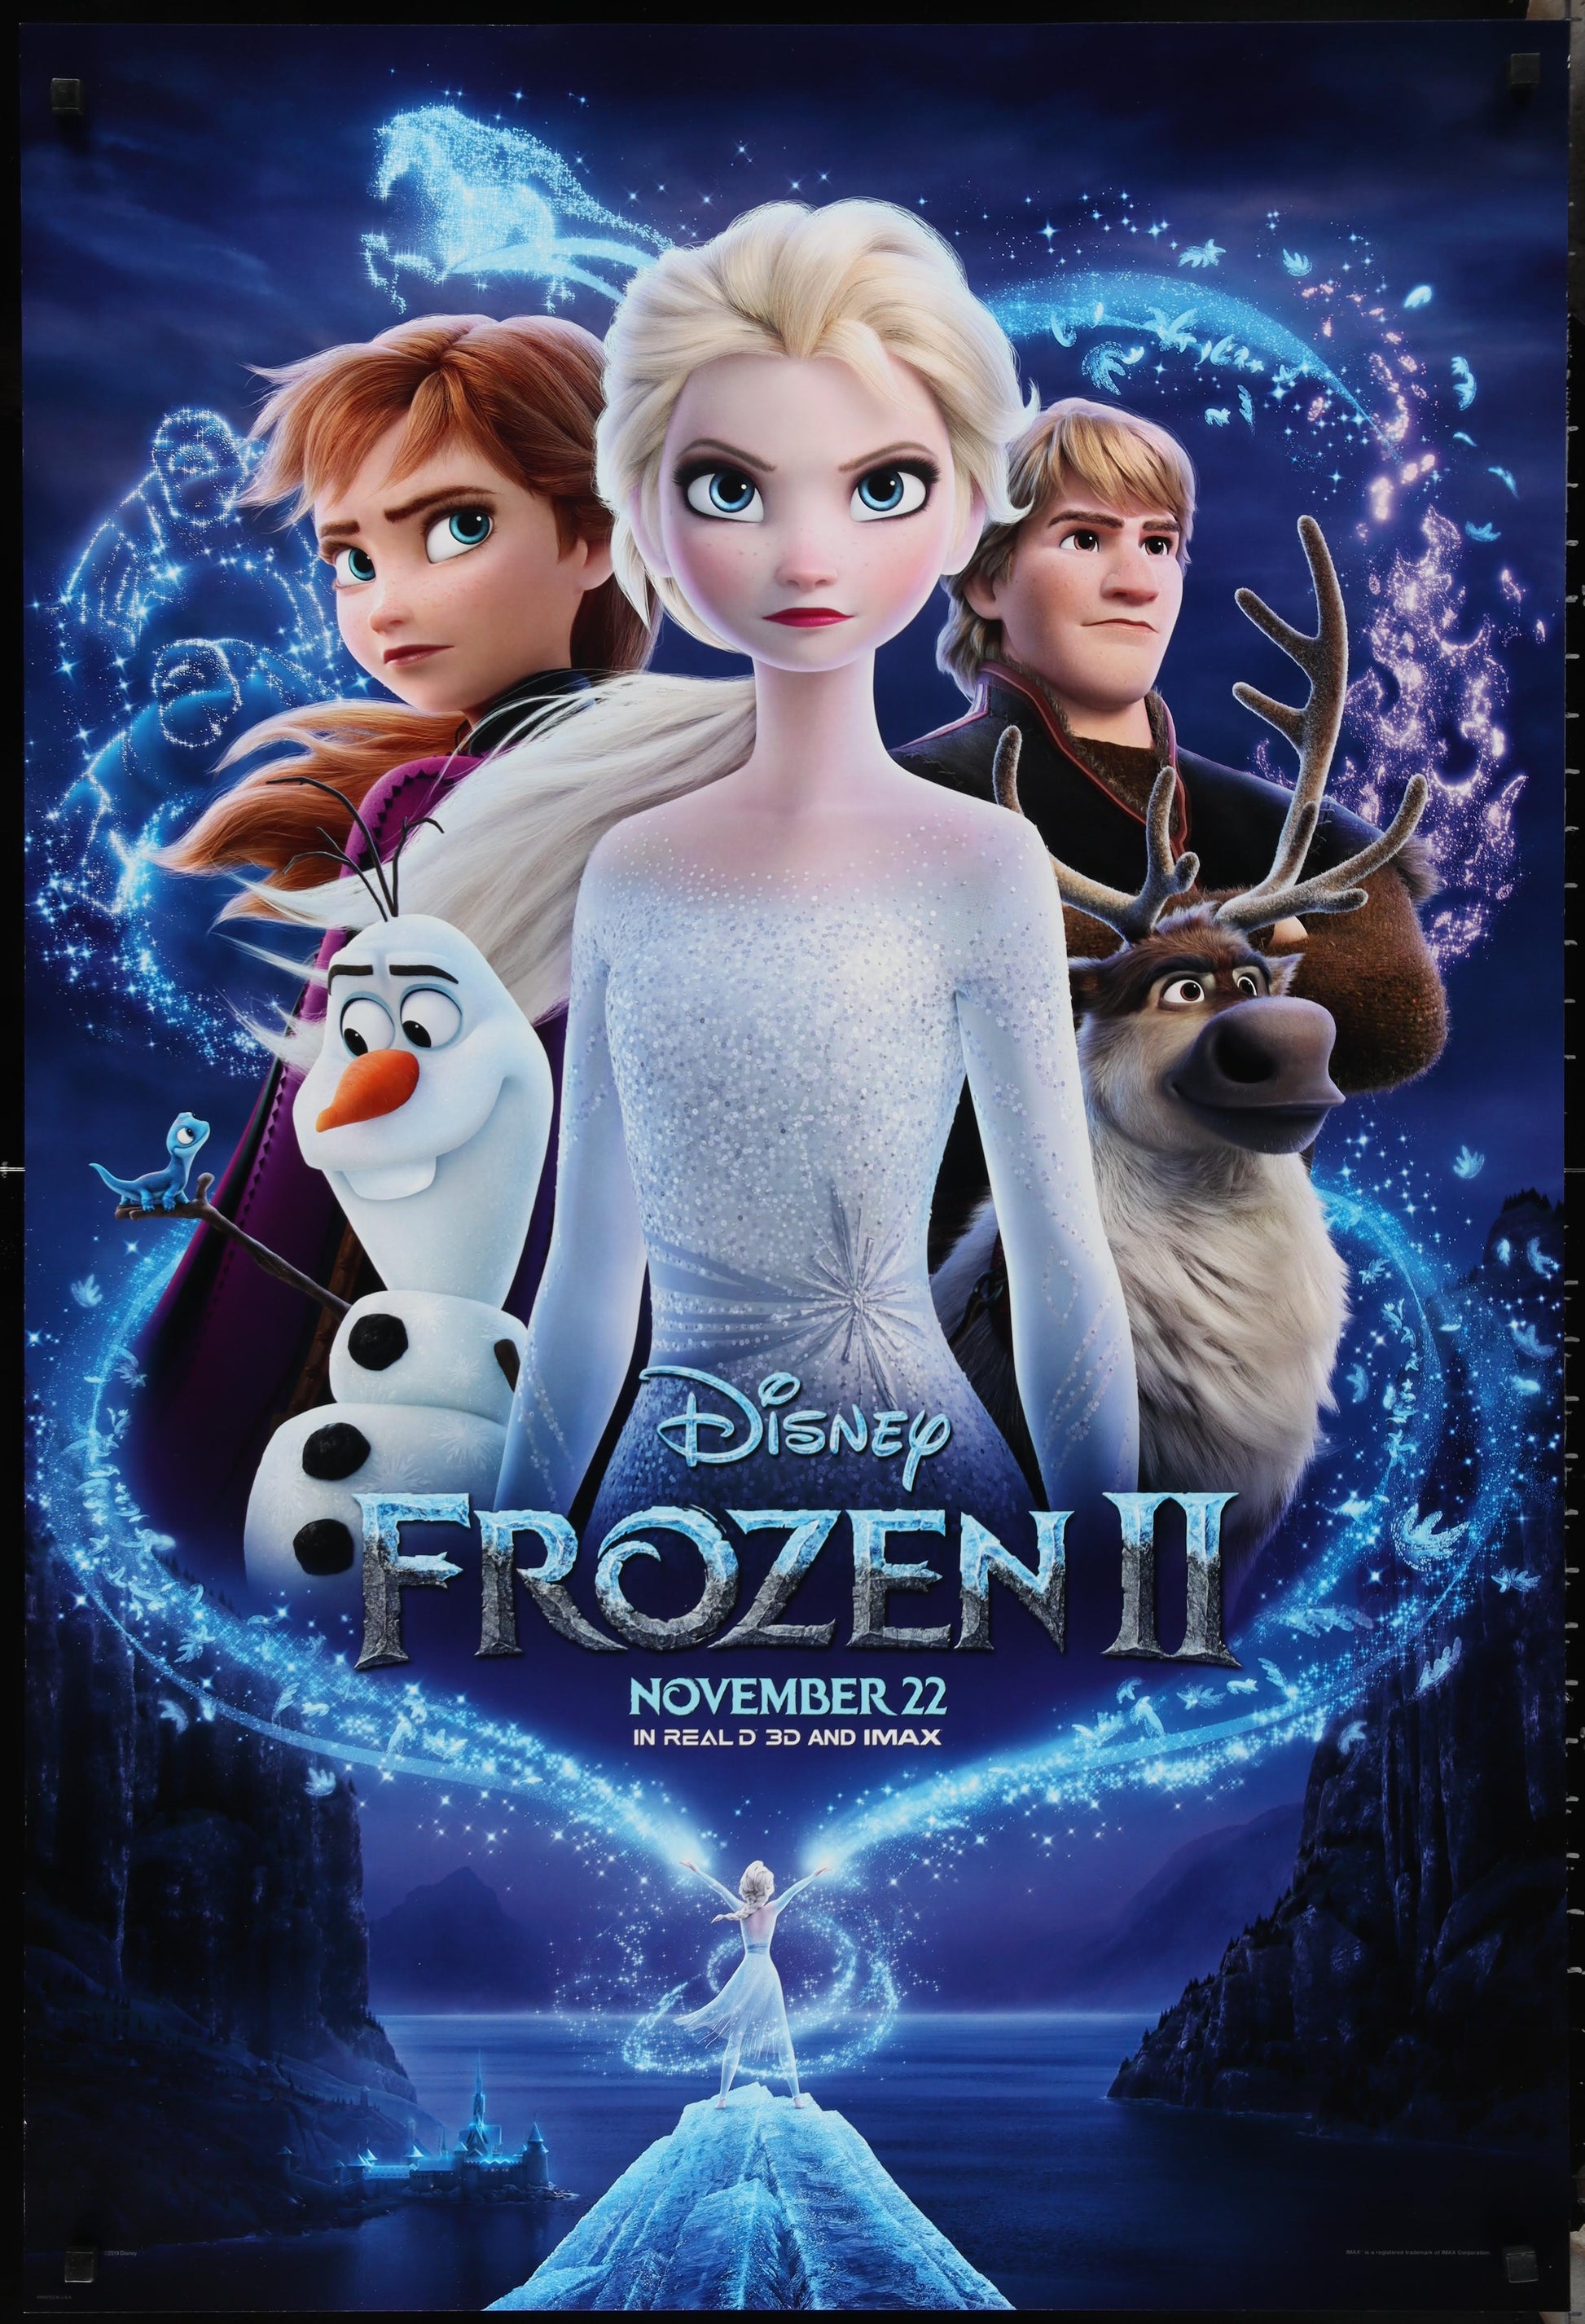 Frozen II US One Sheet (2019) - ORIGINAL RELEASE - posterpalace.com